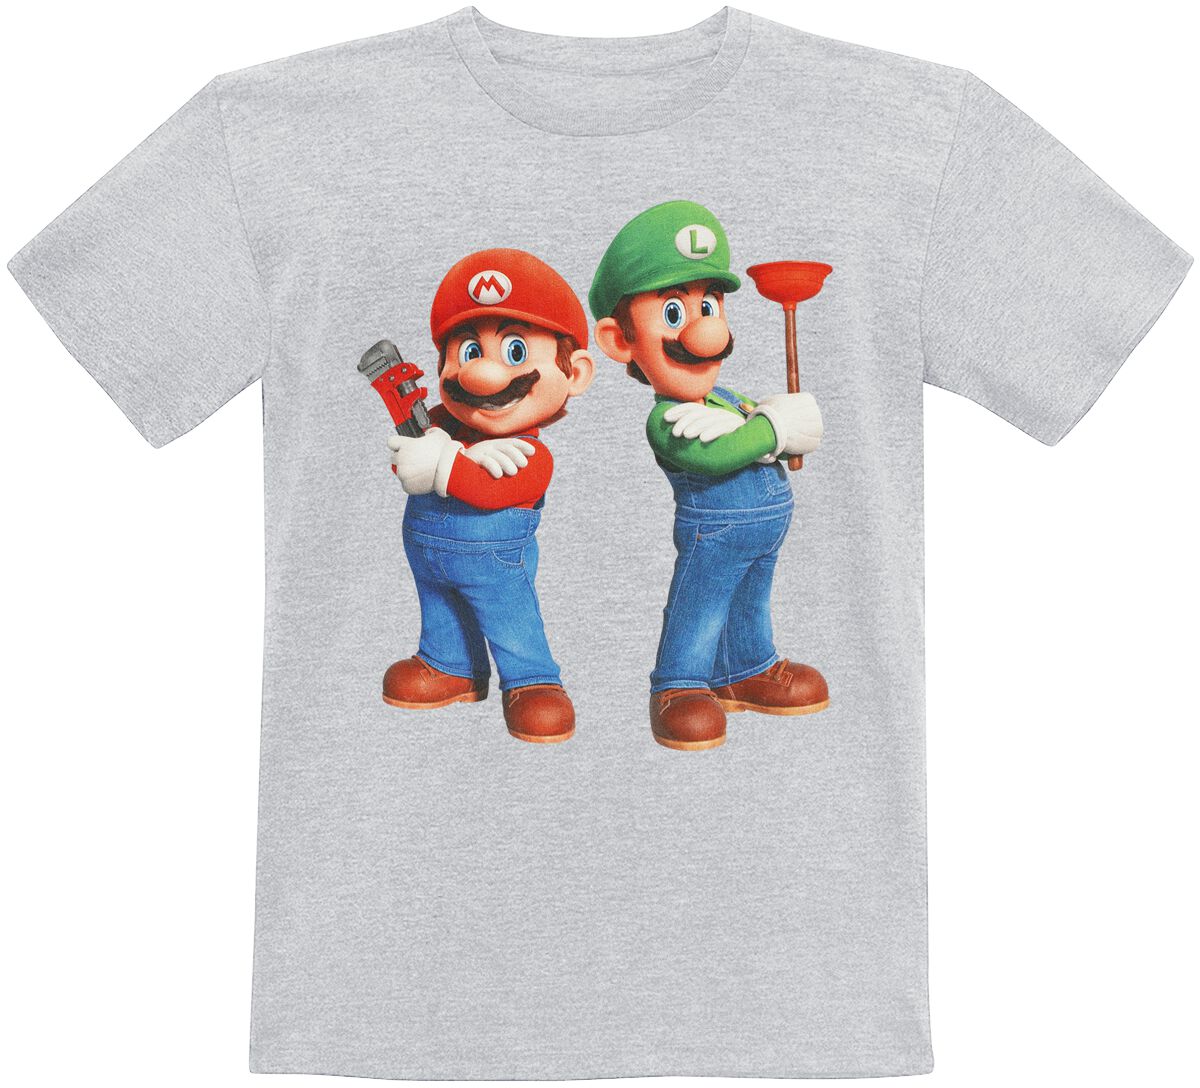 Super Mario Kids - Plumbing Bros. T-Shirt grau in 116